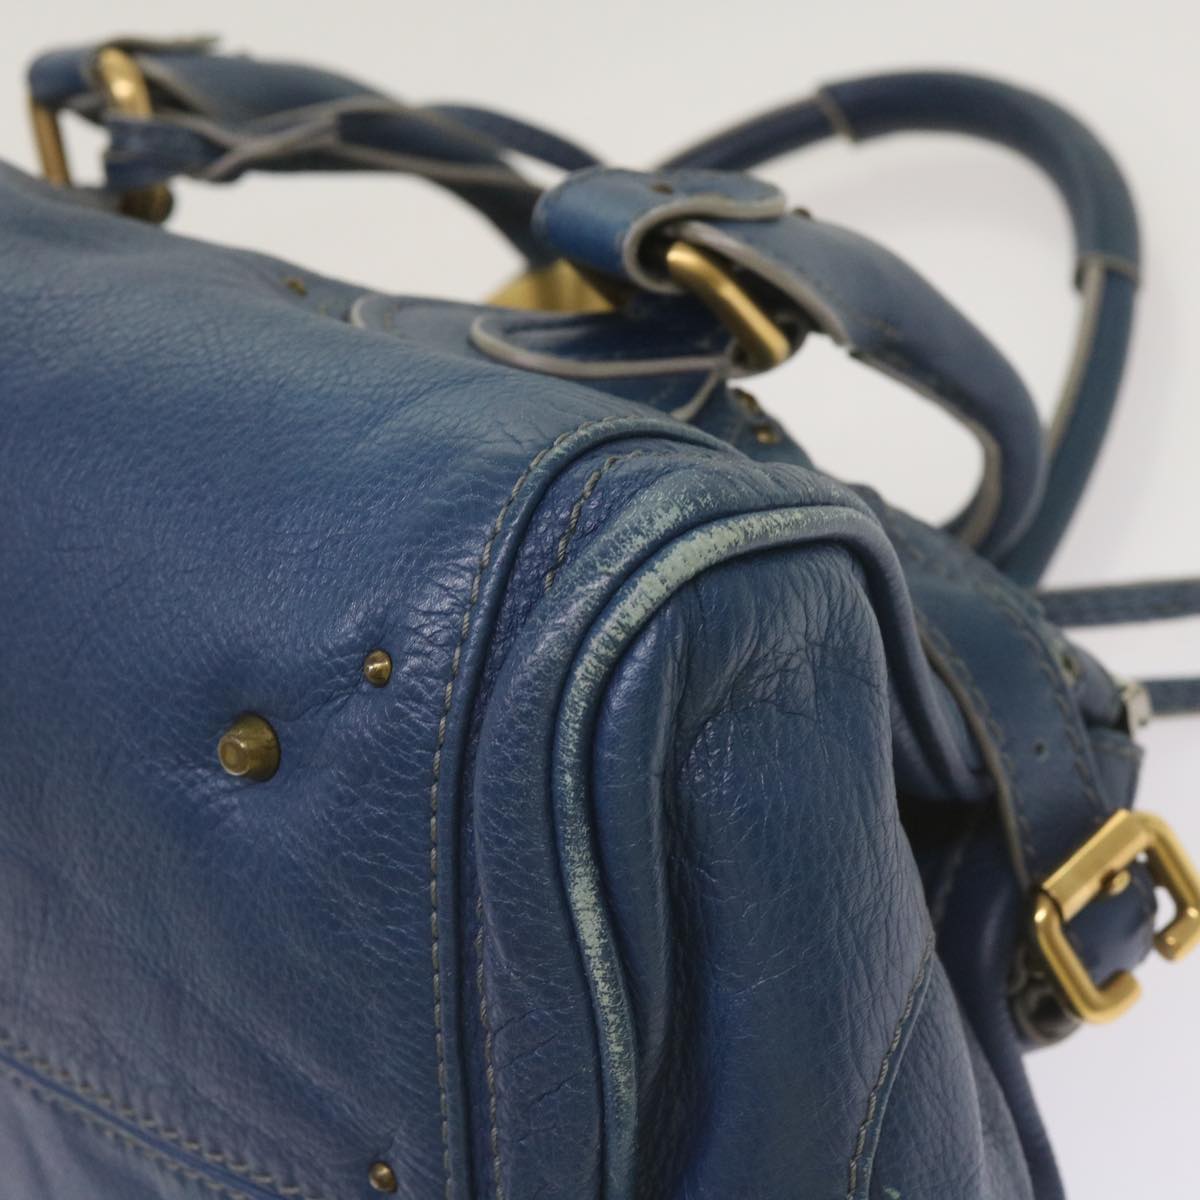 Chloe Paddington Shoulder Bag Leather Blue Auth 66849